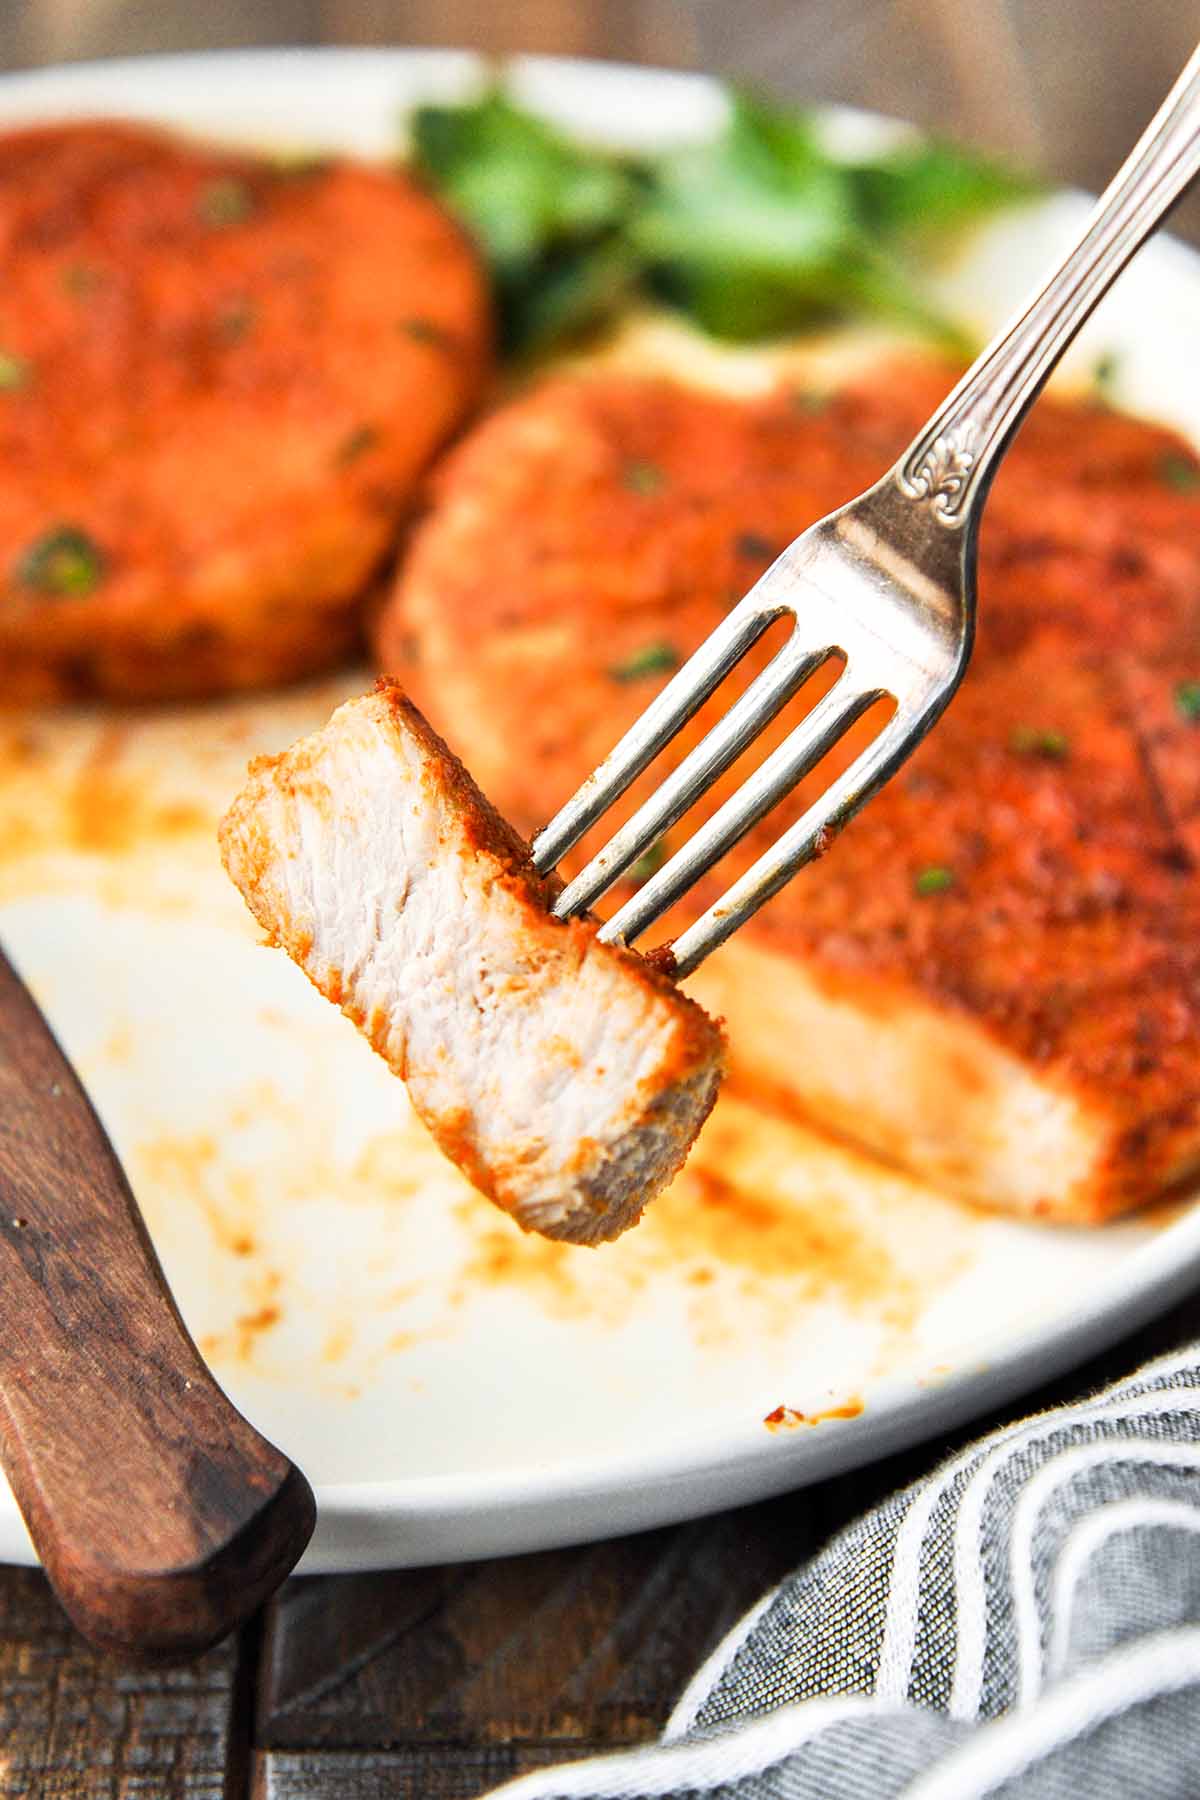 An up close of a bite of pork chop on a fork.